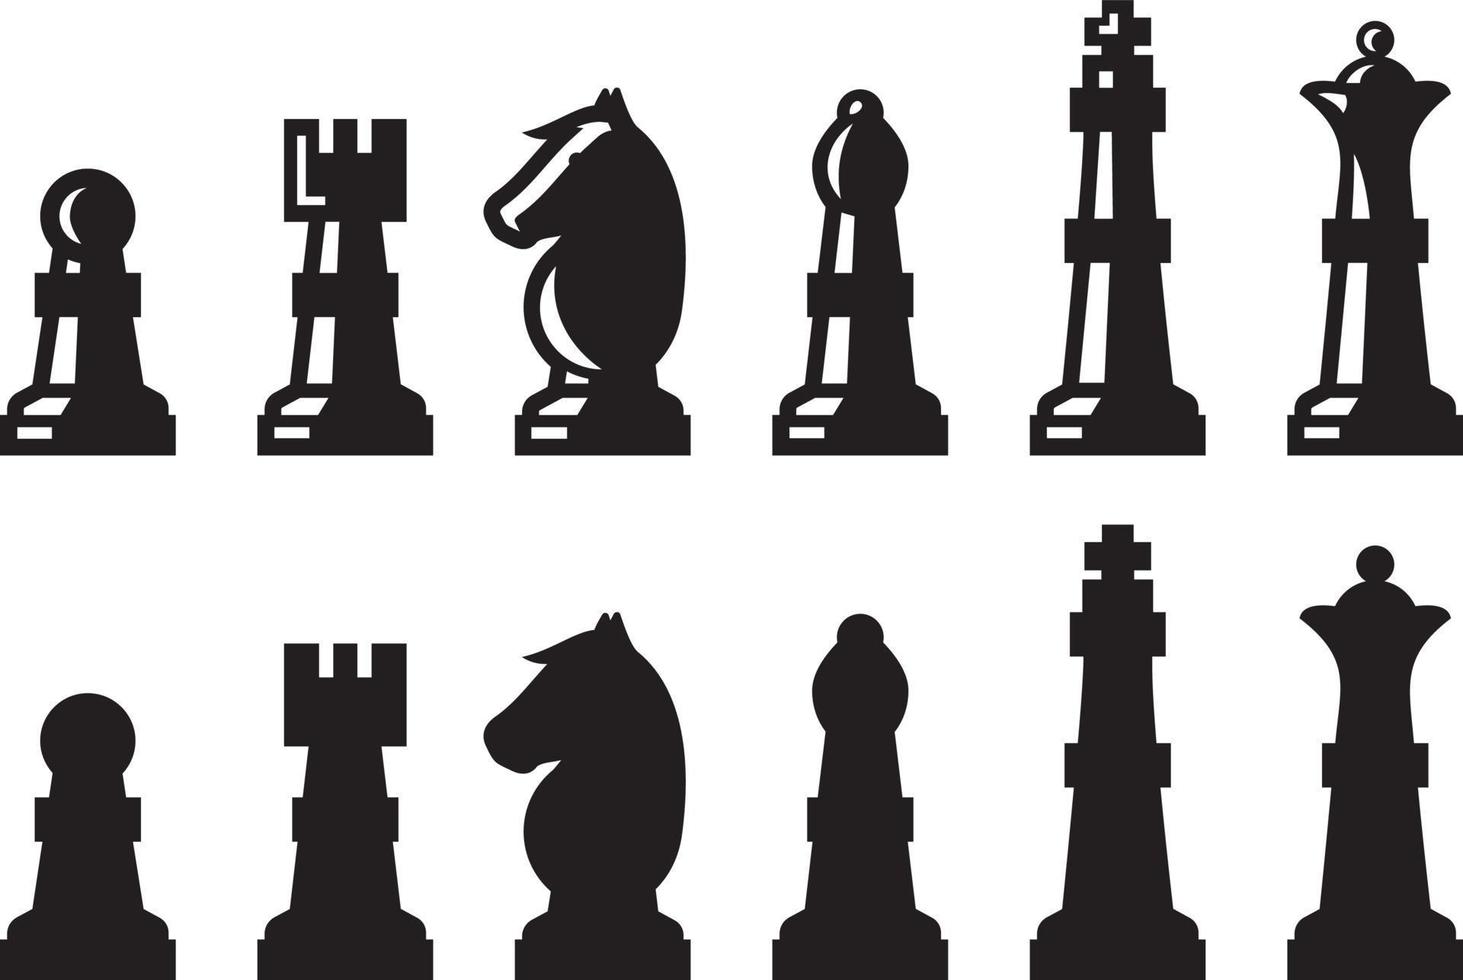 schaakfiguren silhouet set vector